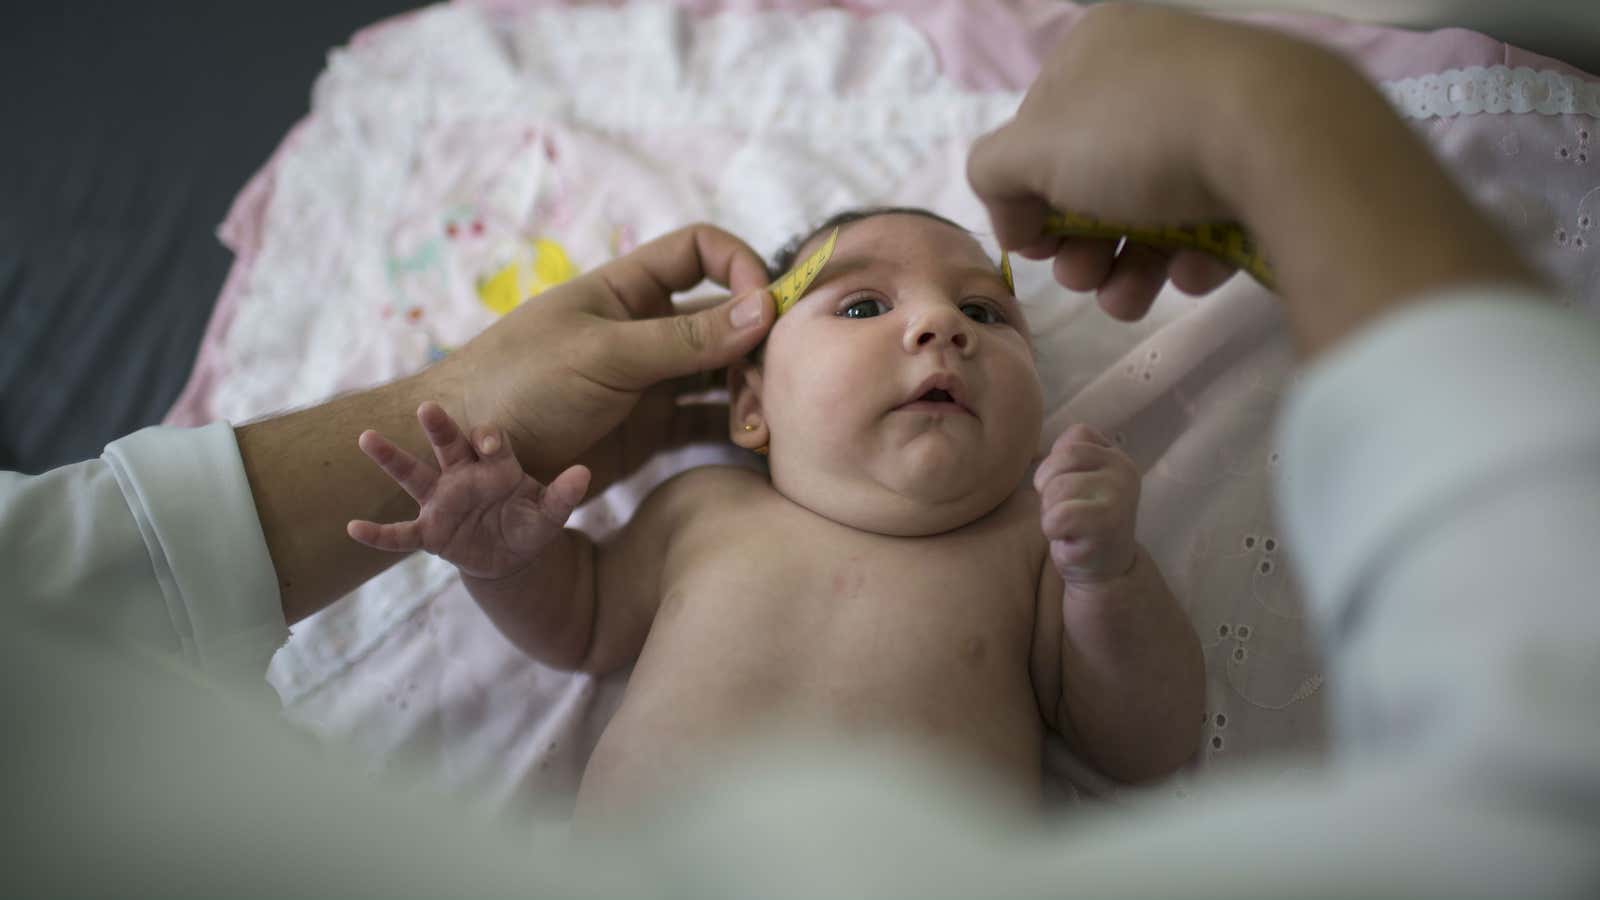 A baby in Brazil has her head measured by a neurologist.